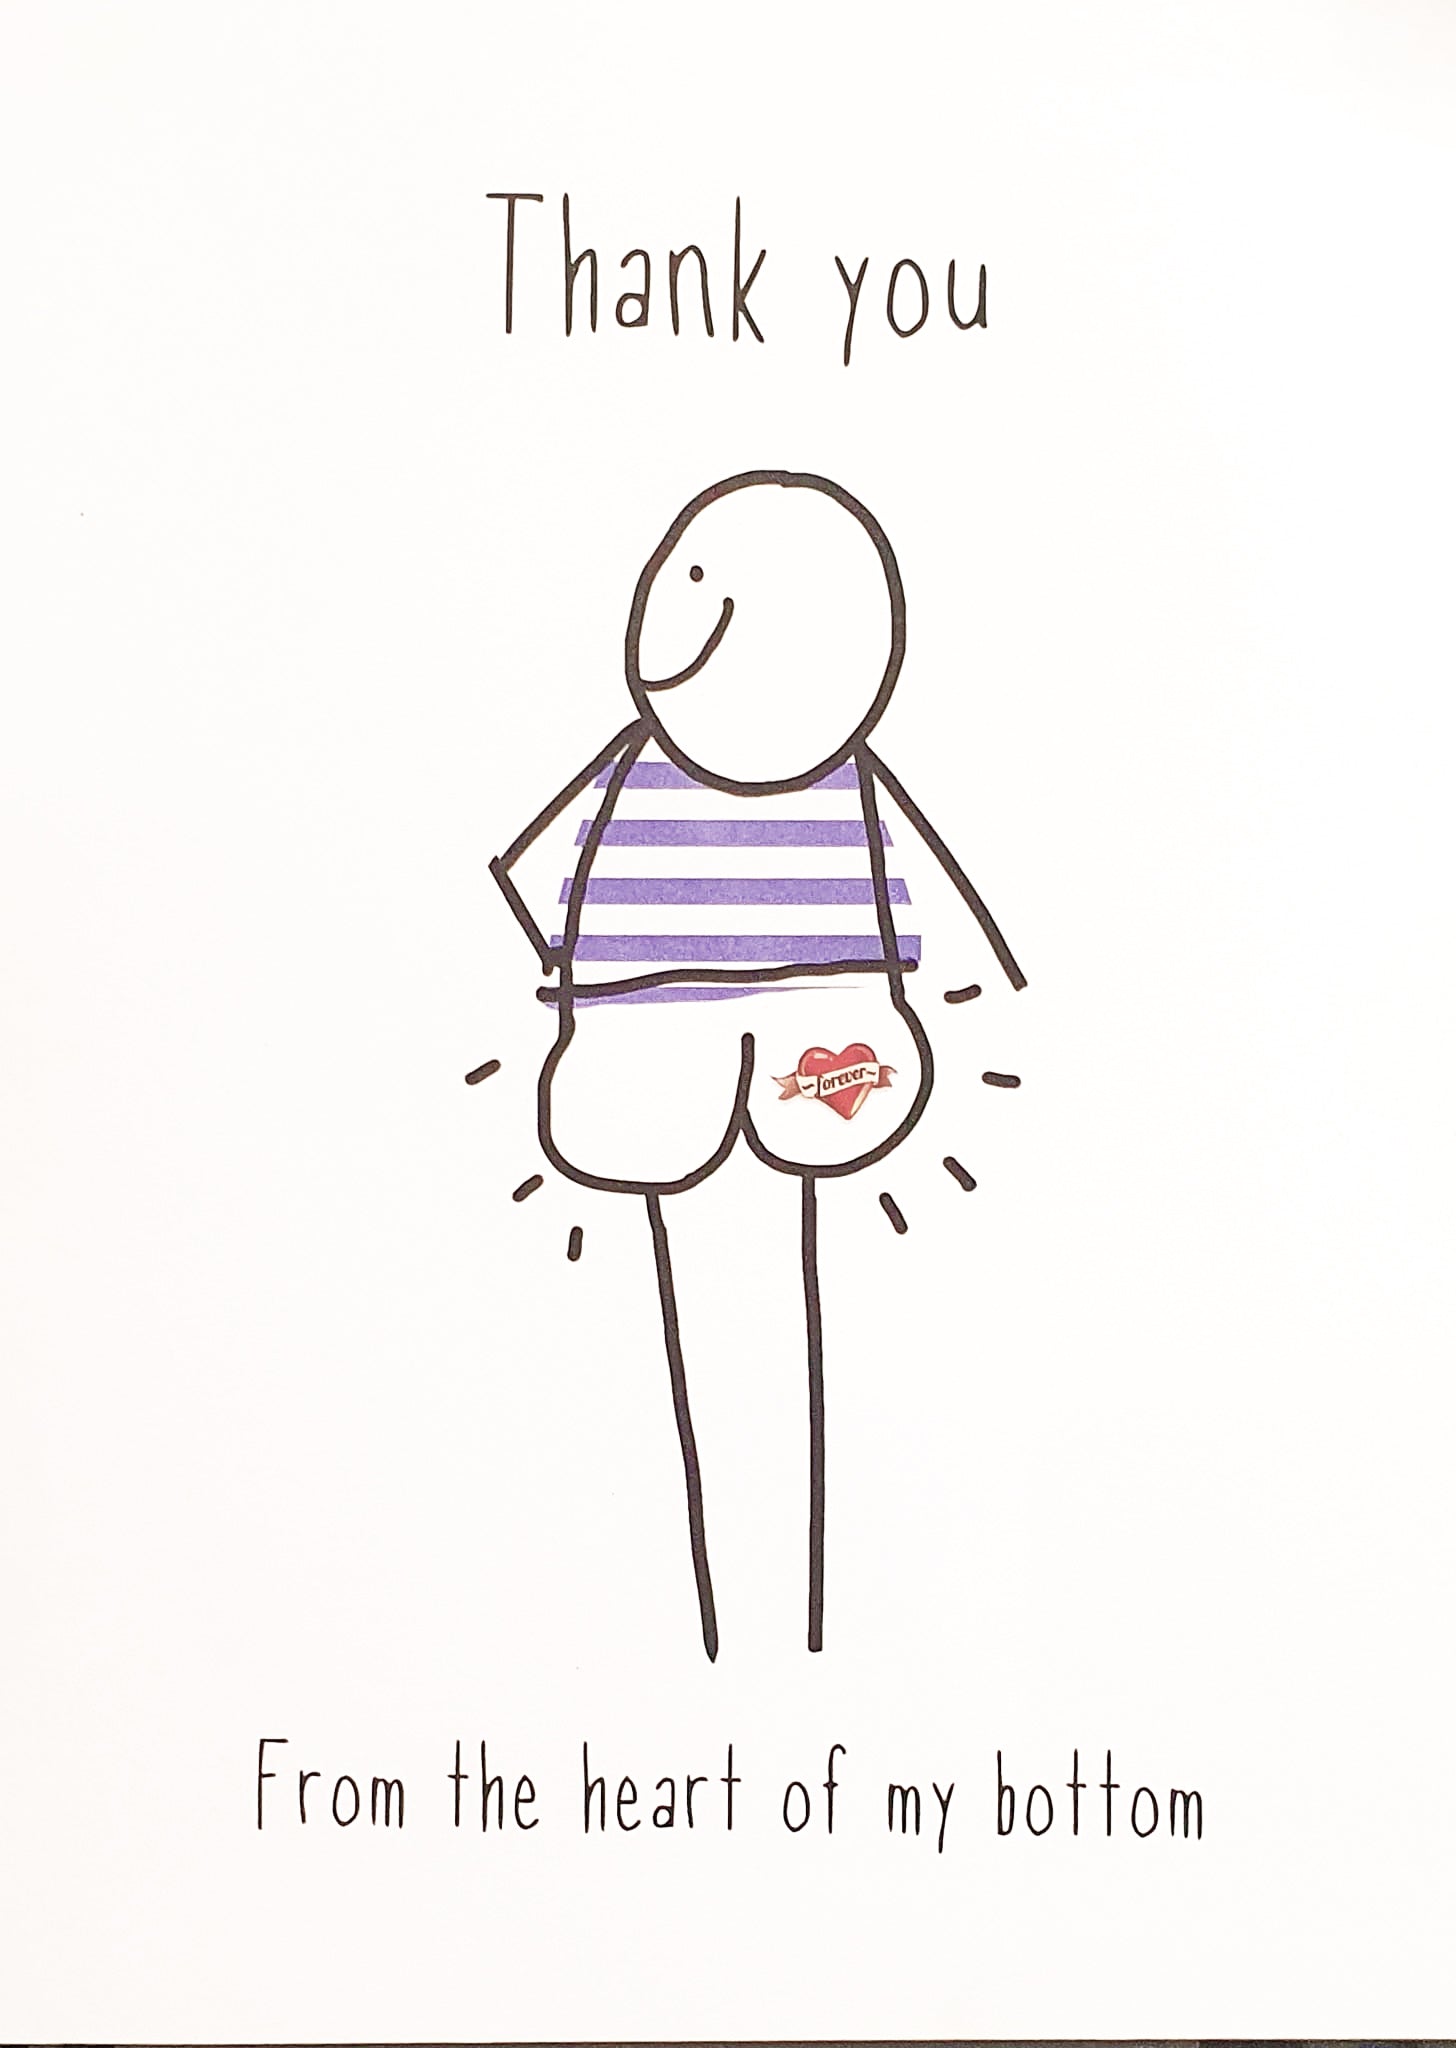 Humorous Thank You Card - Illustration From Heartfelt Bottom